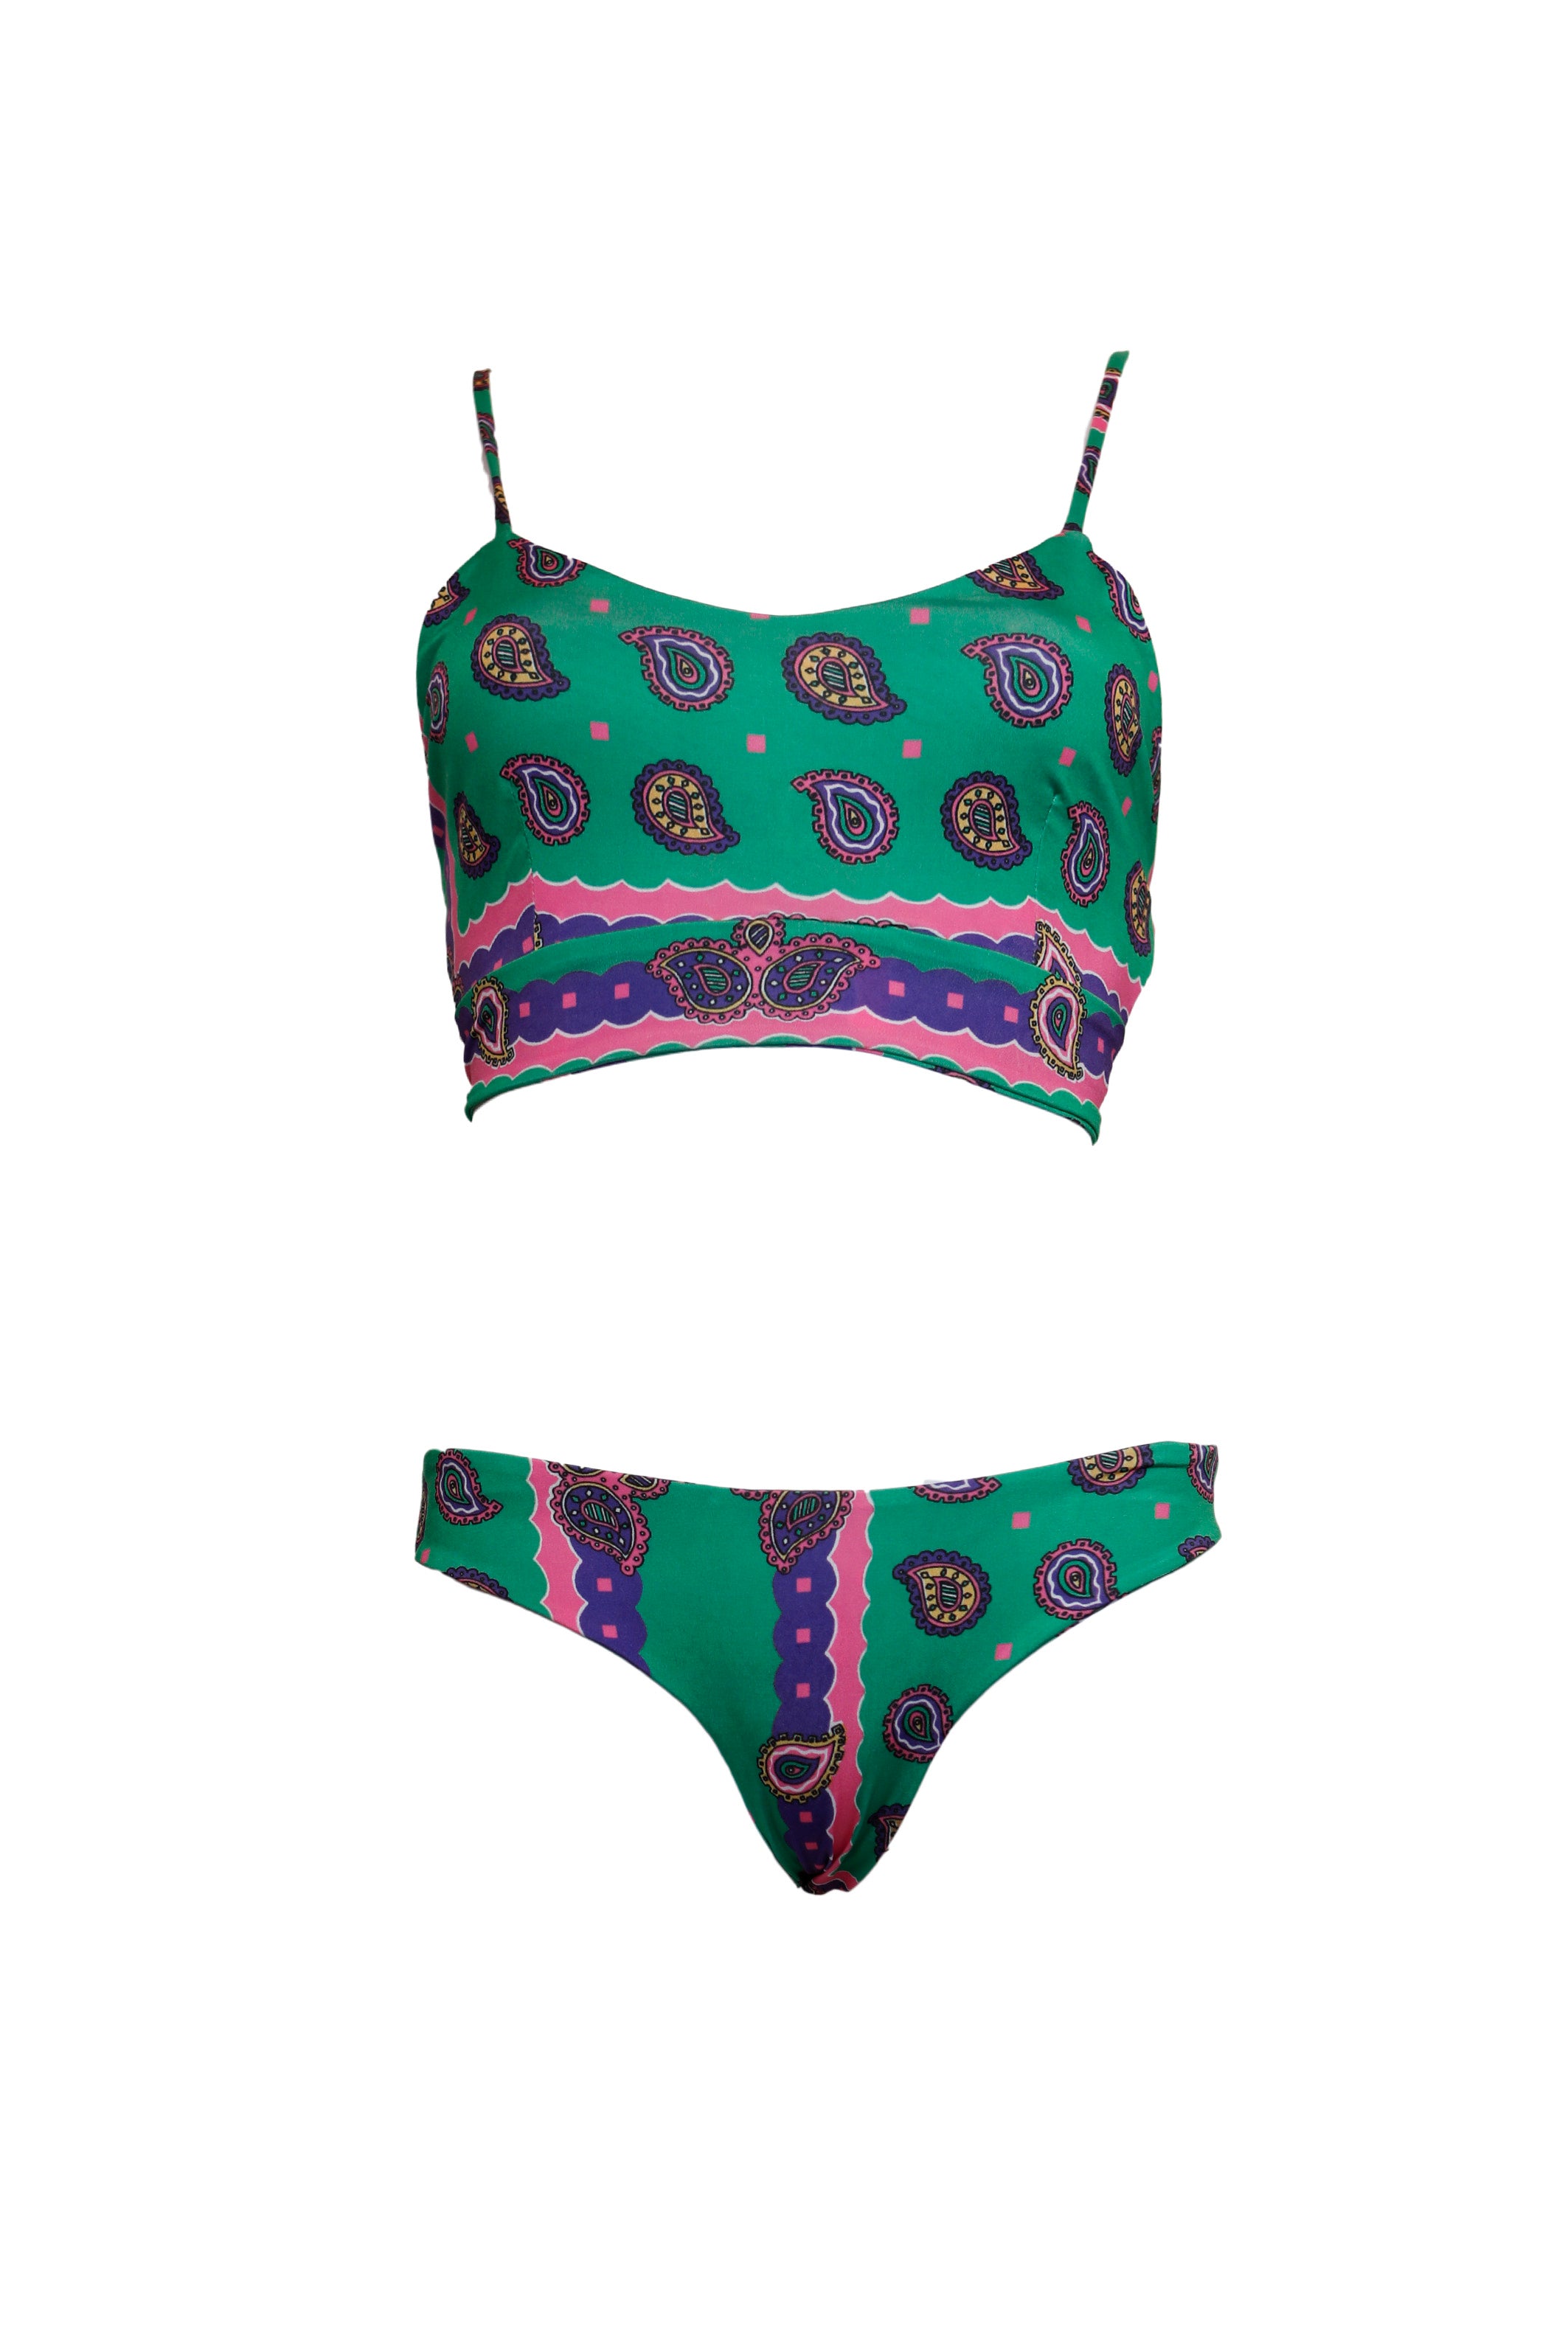 CECILIA - two-piece swimsuit in green Ibiza bandana print lycra